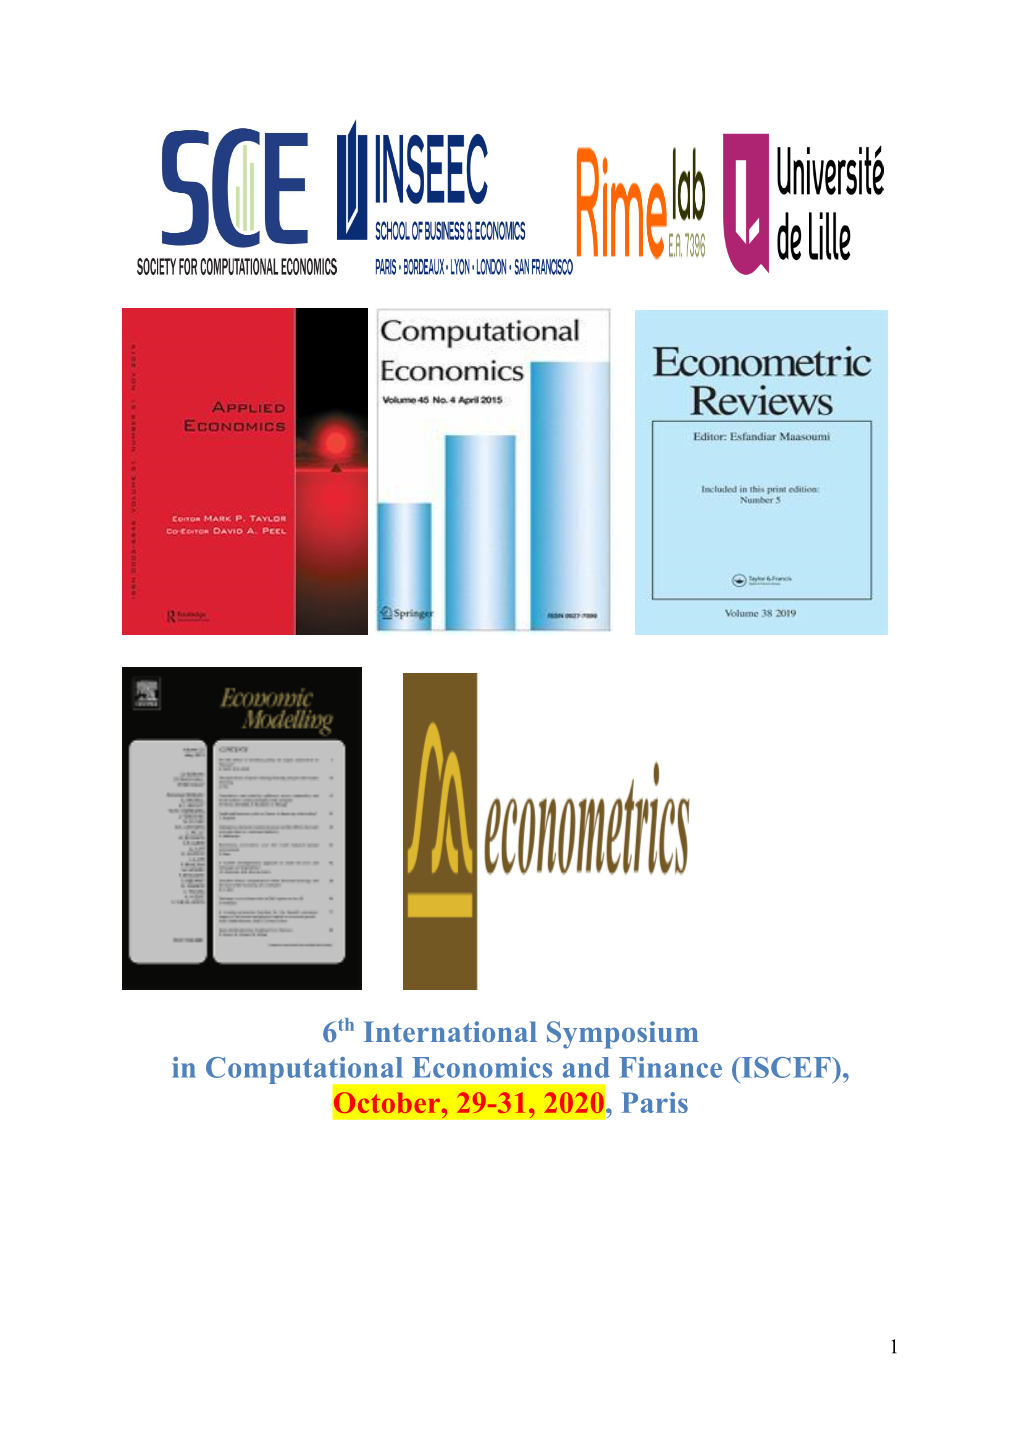 6Th International Symposium in Computational Economics and Finance (ISCEF), October, 29-31, 2020, Paris